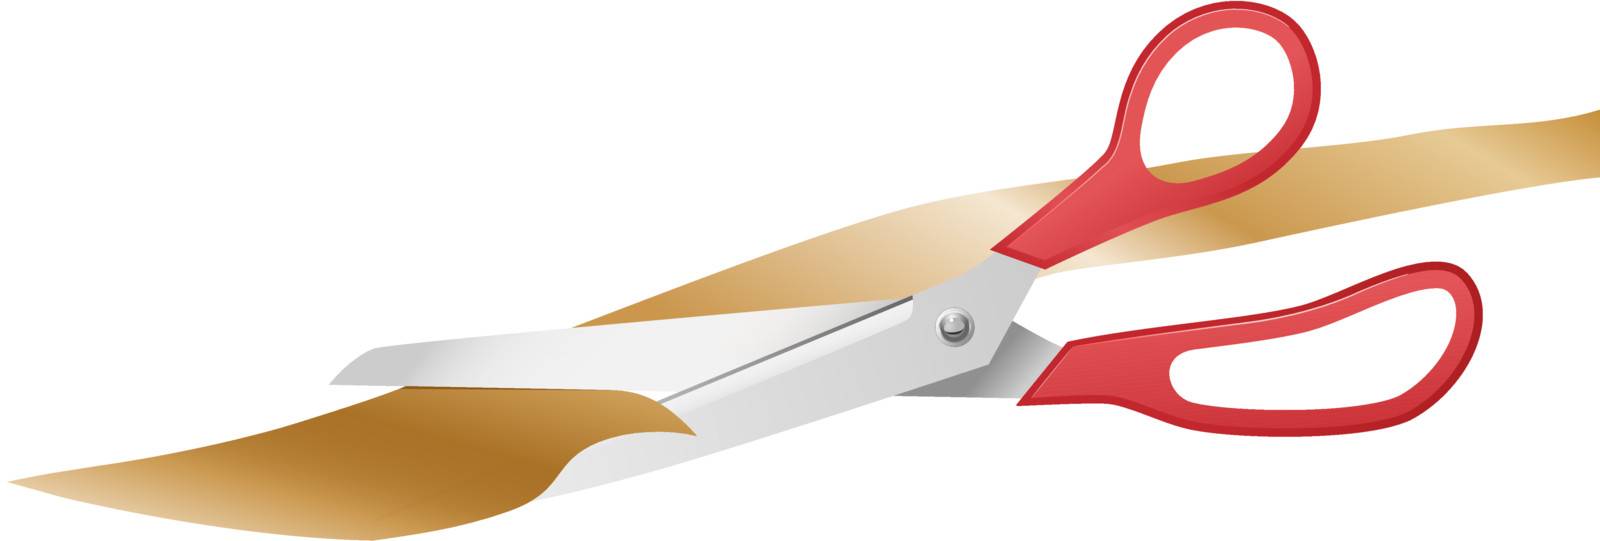 vector illustration of scissors cutting golden ribbon